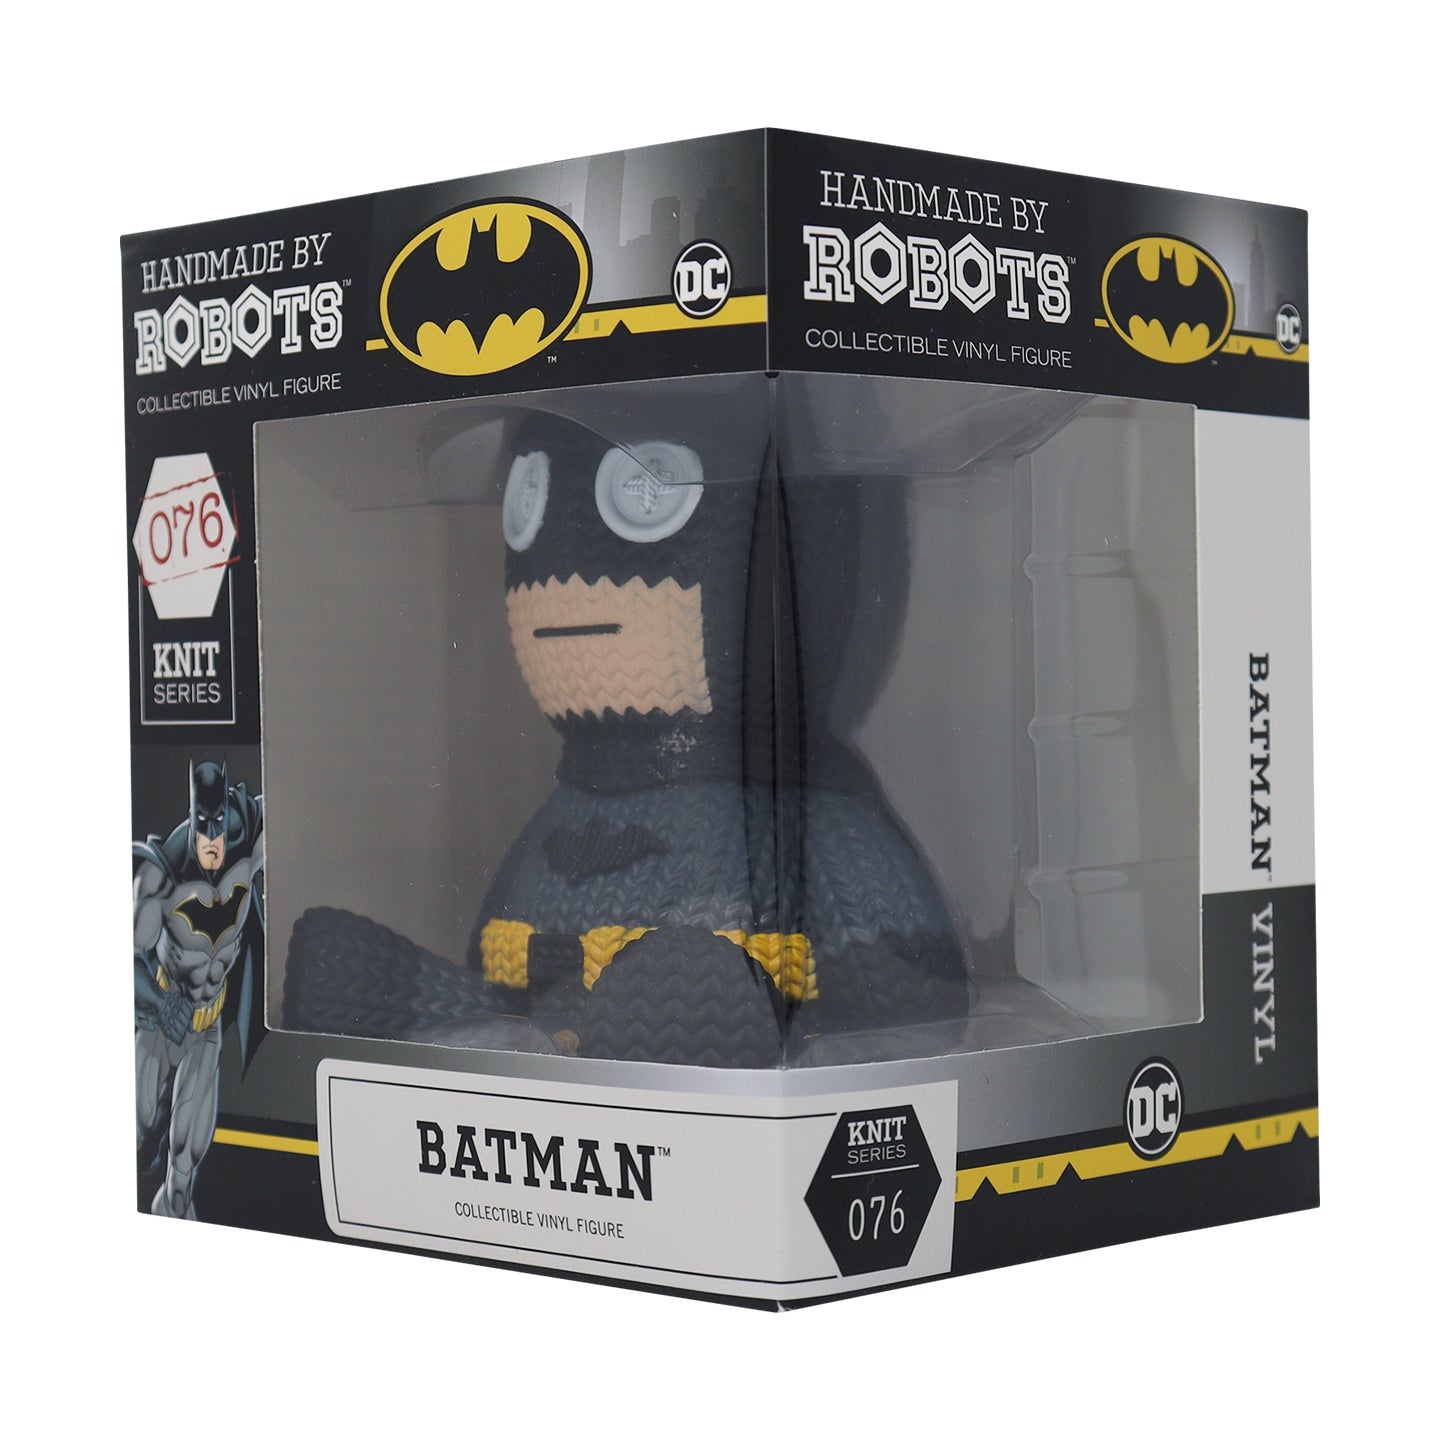 DC - Batman Black Suit Edition Collectible Vinyl Figure from Handmade By Robots